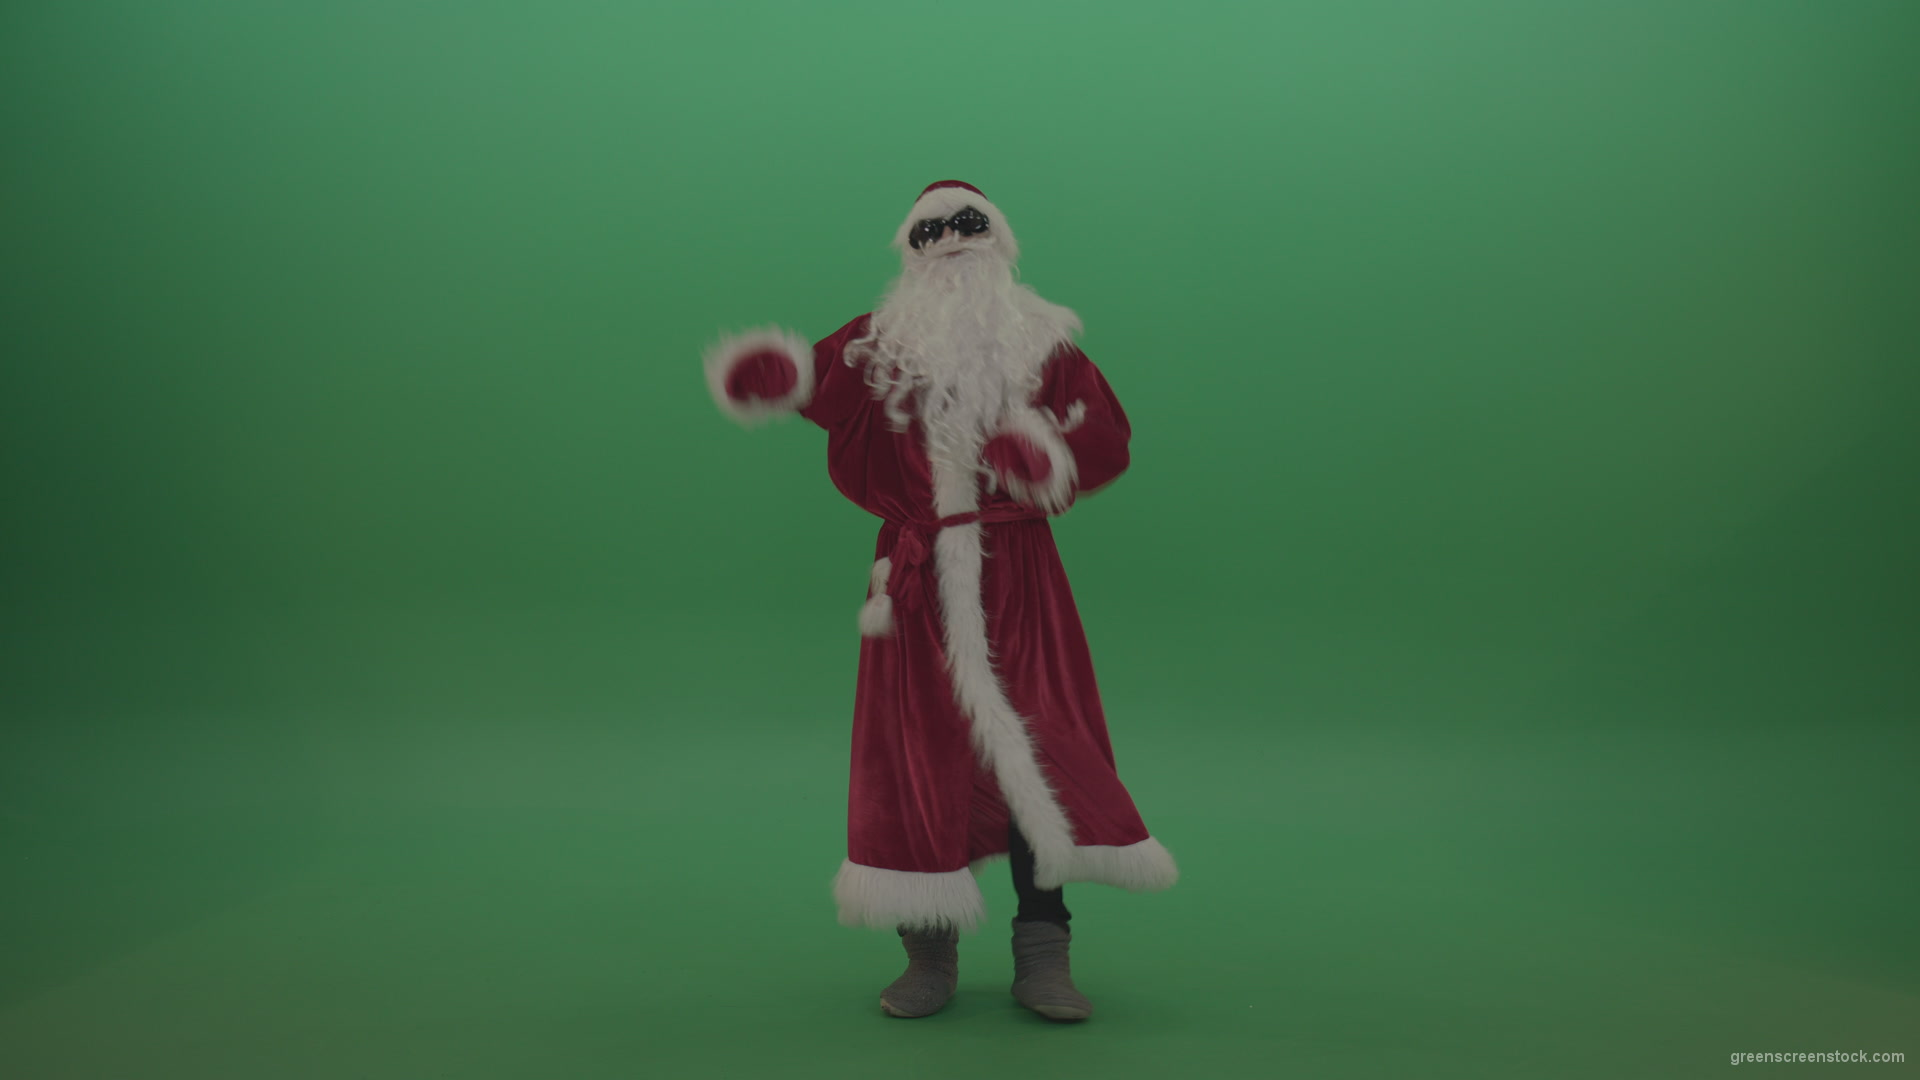 Santa-in-black-glasses-shows-his-dance-skills-over-chromakey-background_006 Green Screen Stock